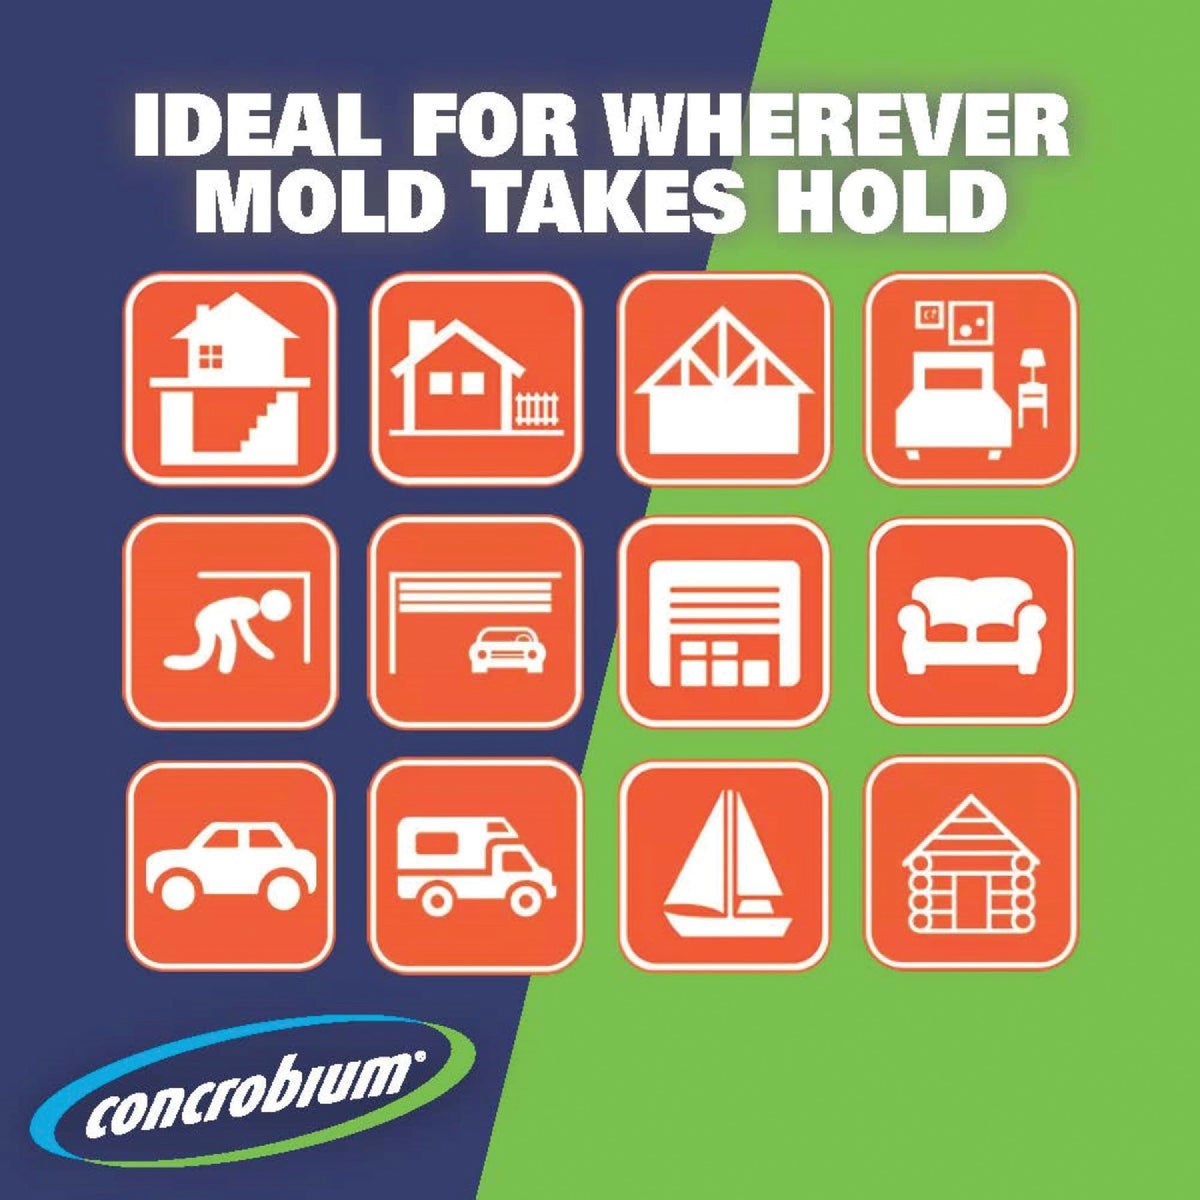 Concrobium Mold Control 32 Oz. Eliminates & Prevents Mold & Mildew